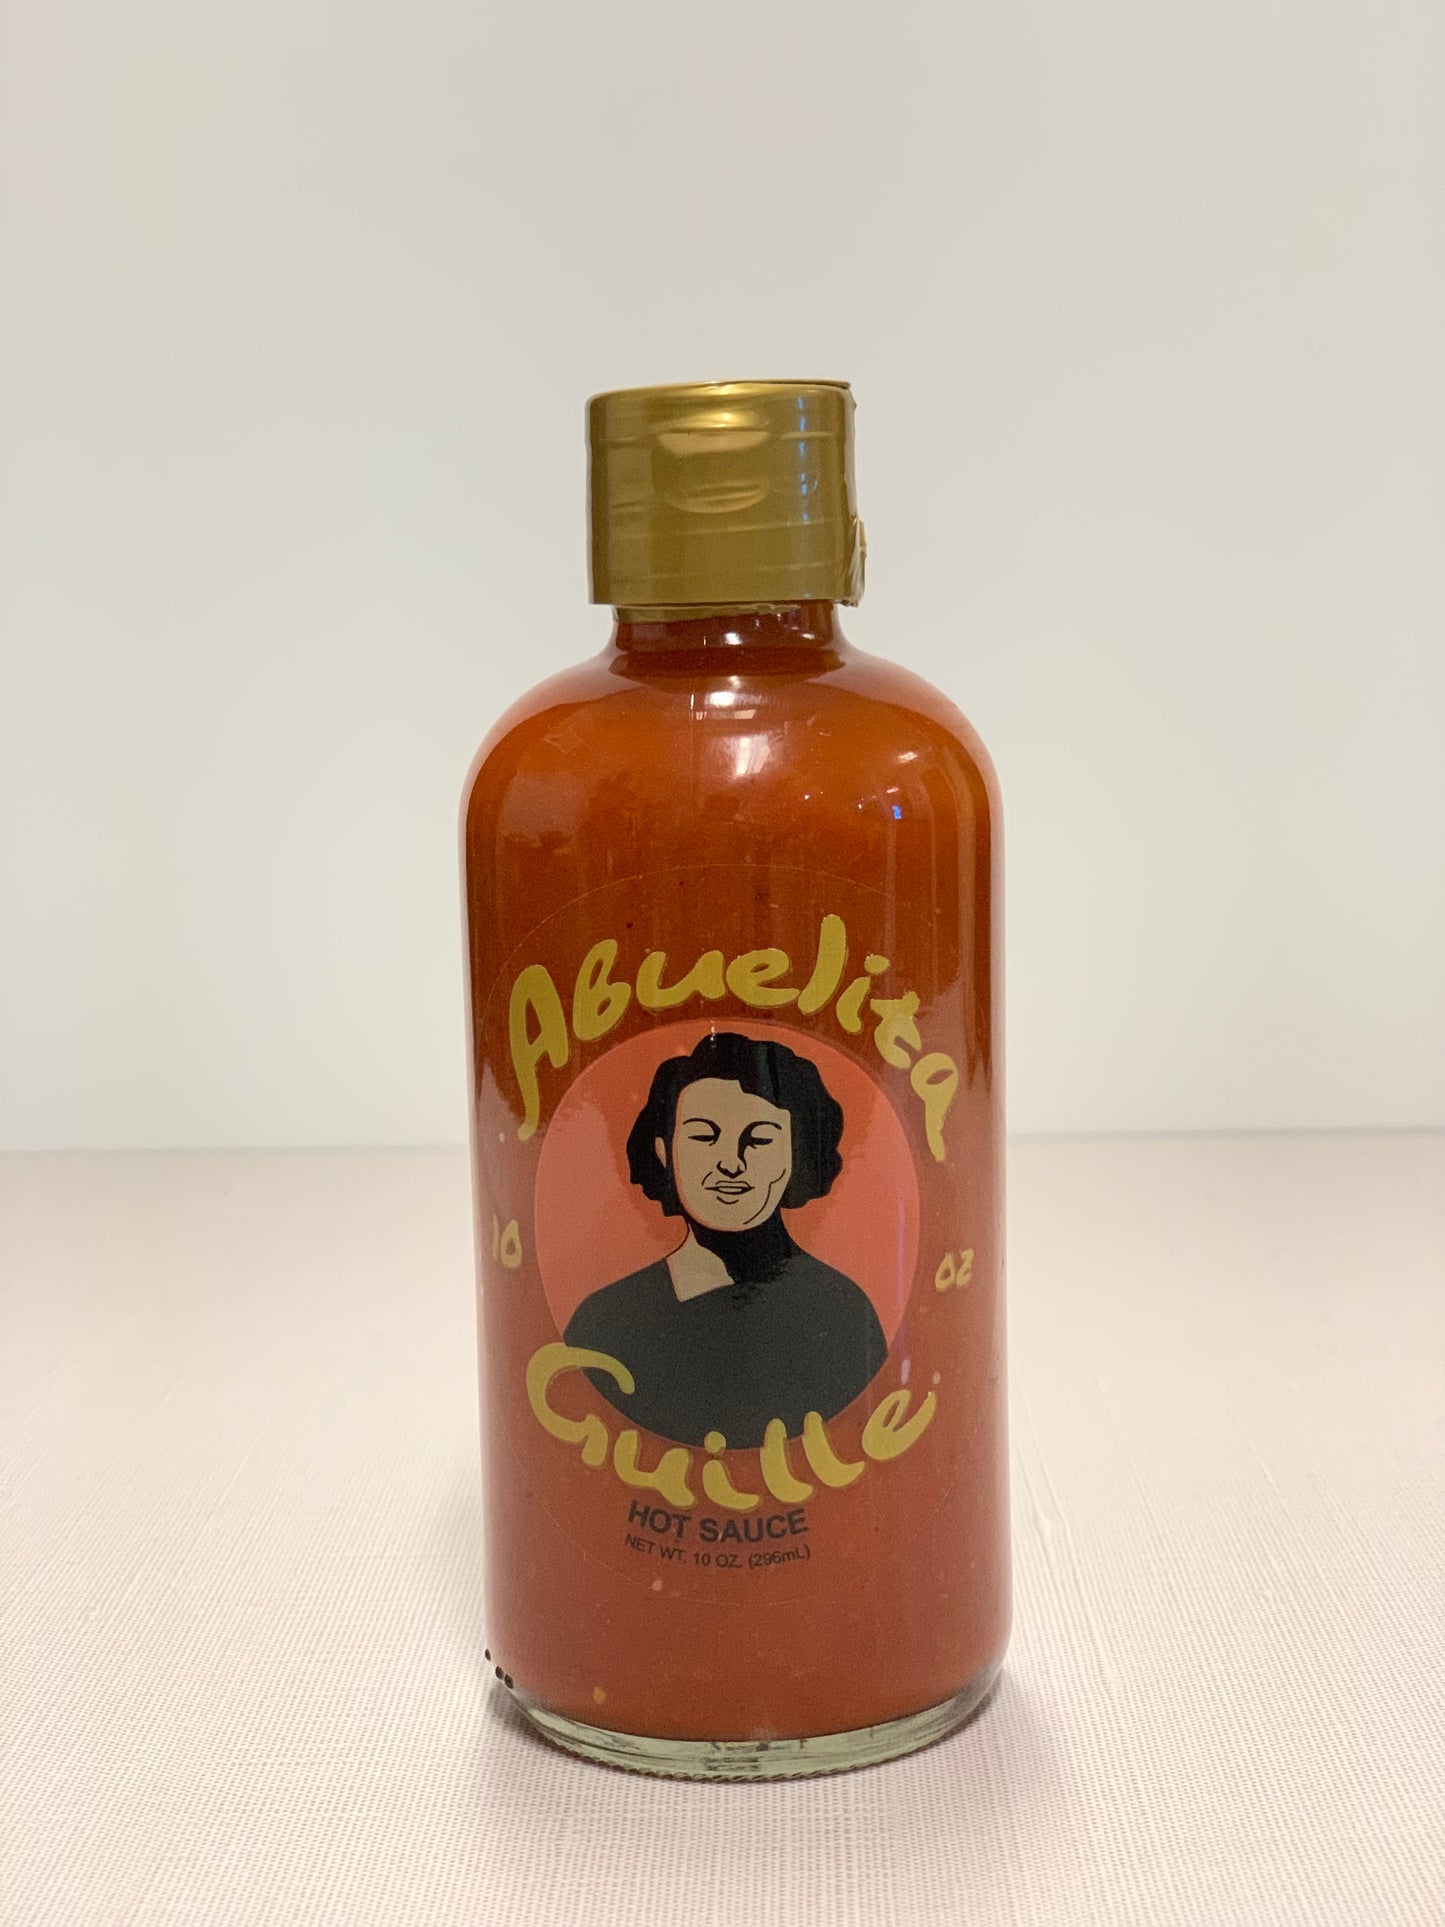 Abuelita Guille Hot Sauce